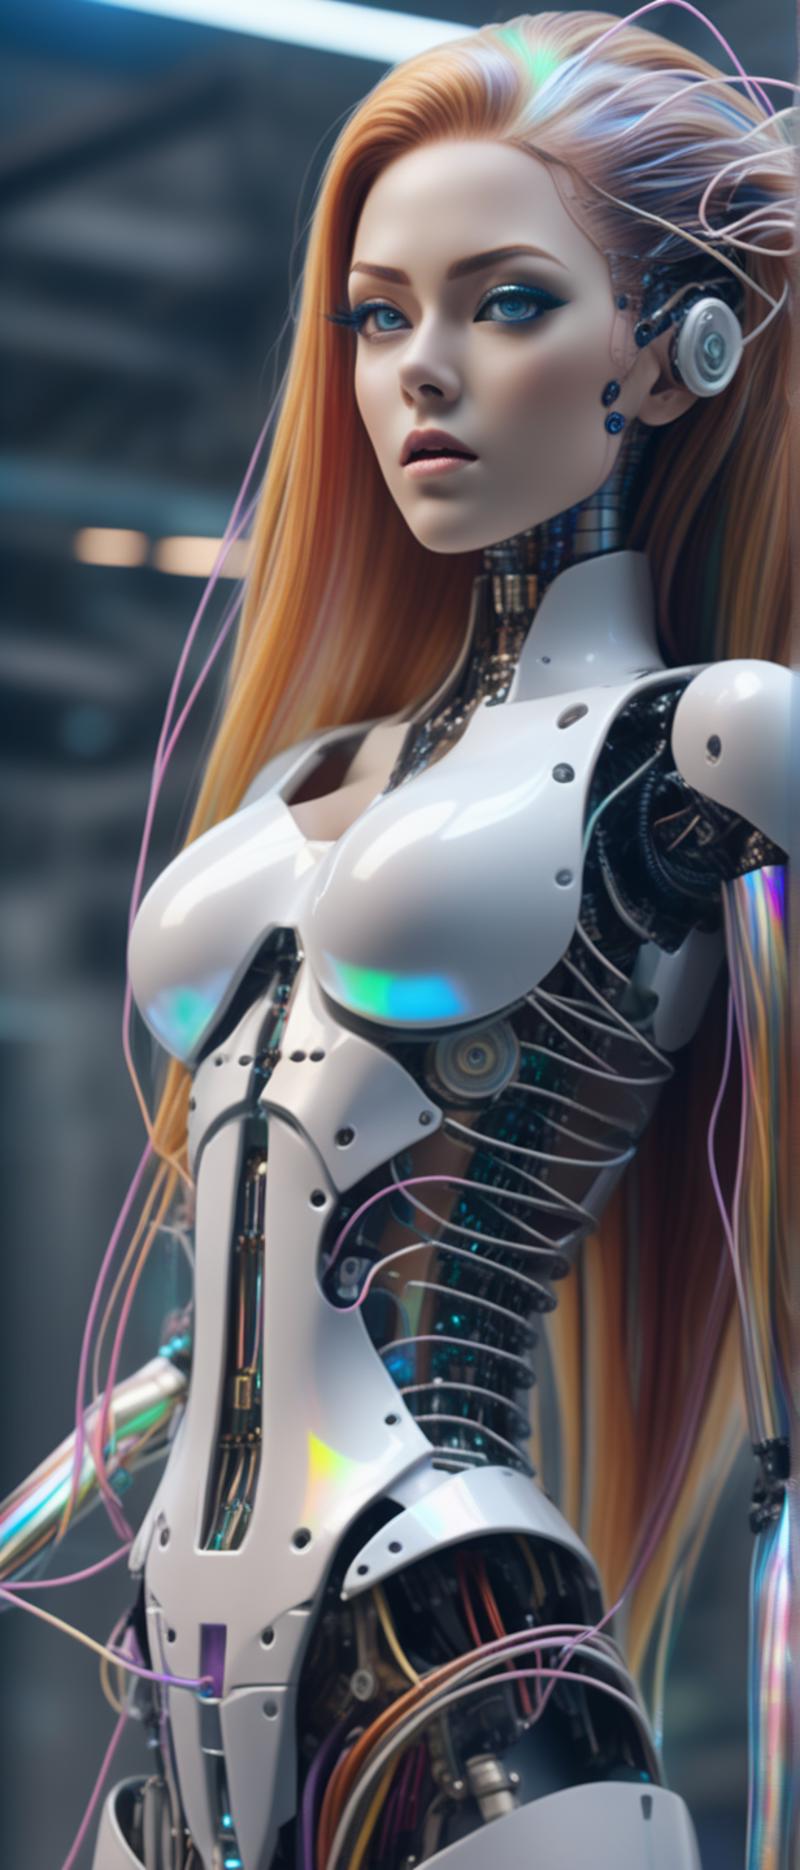 AI model image by BrokenSpirit